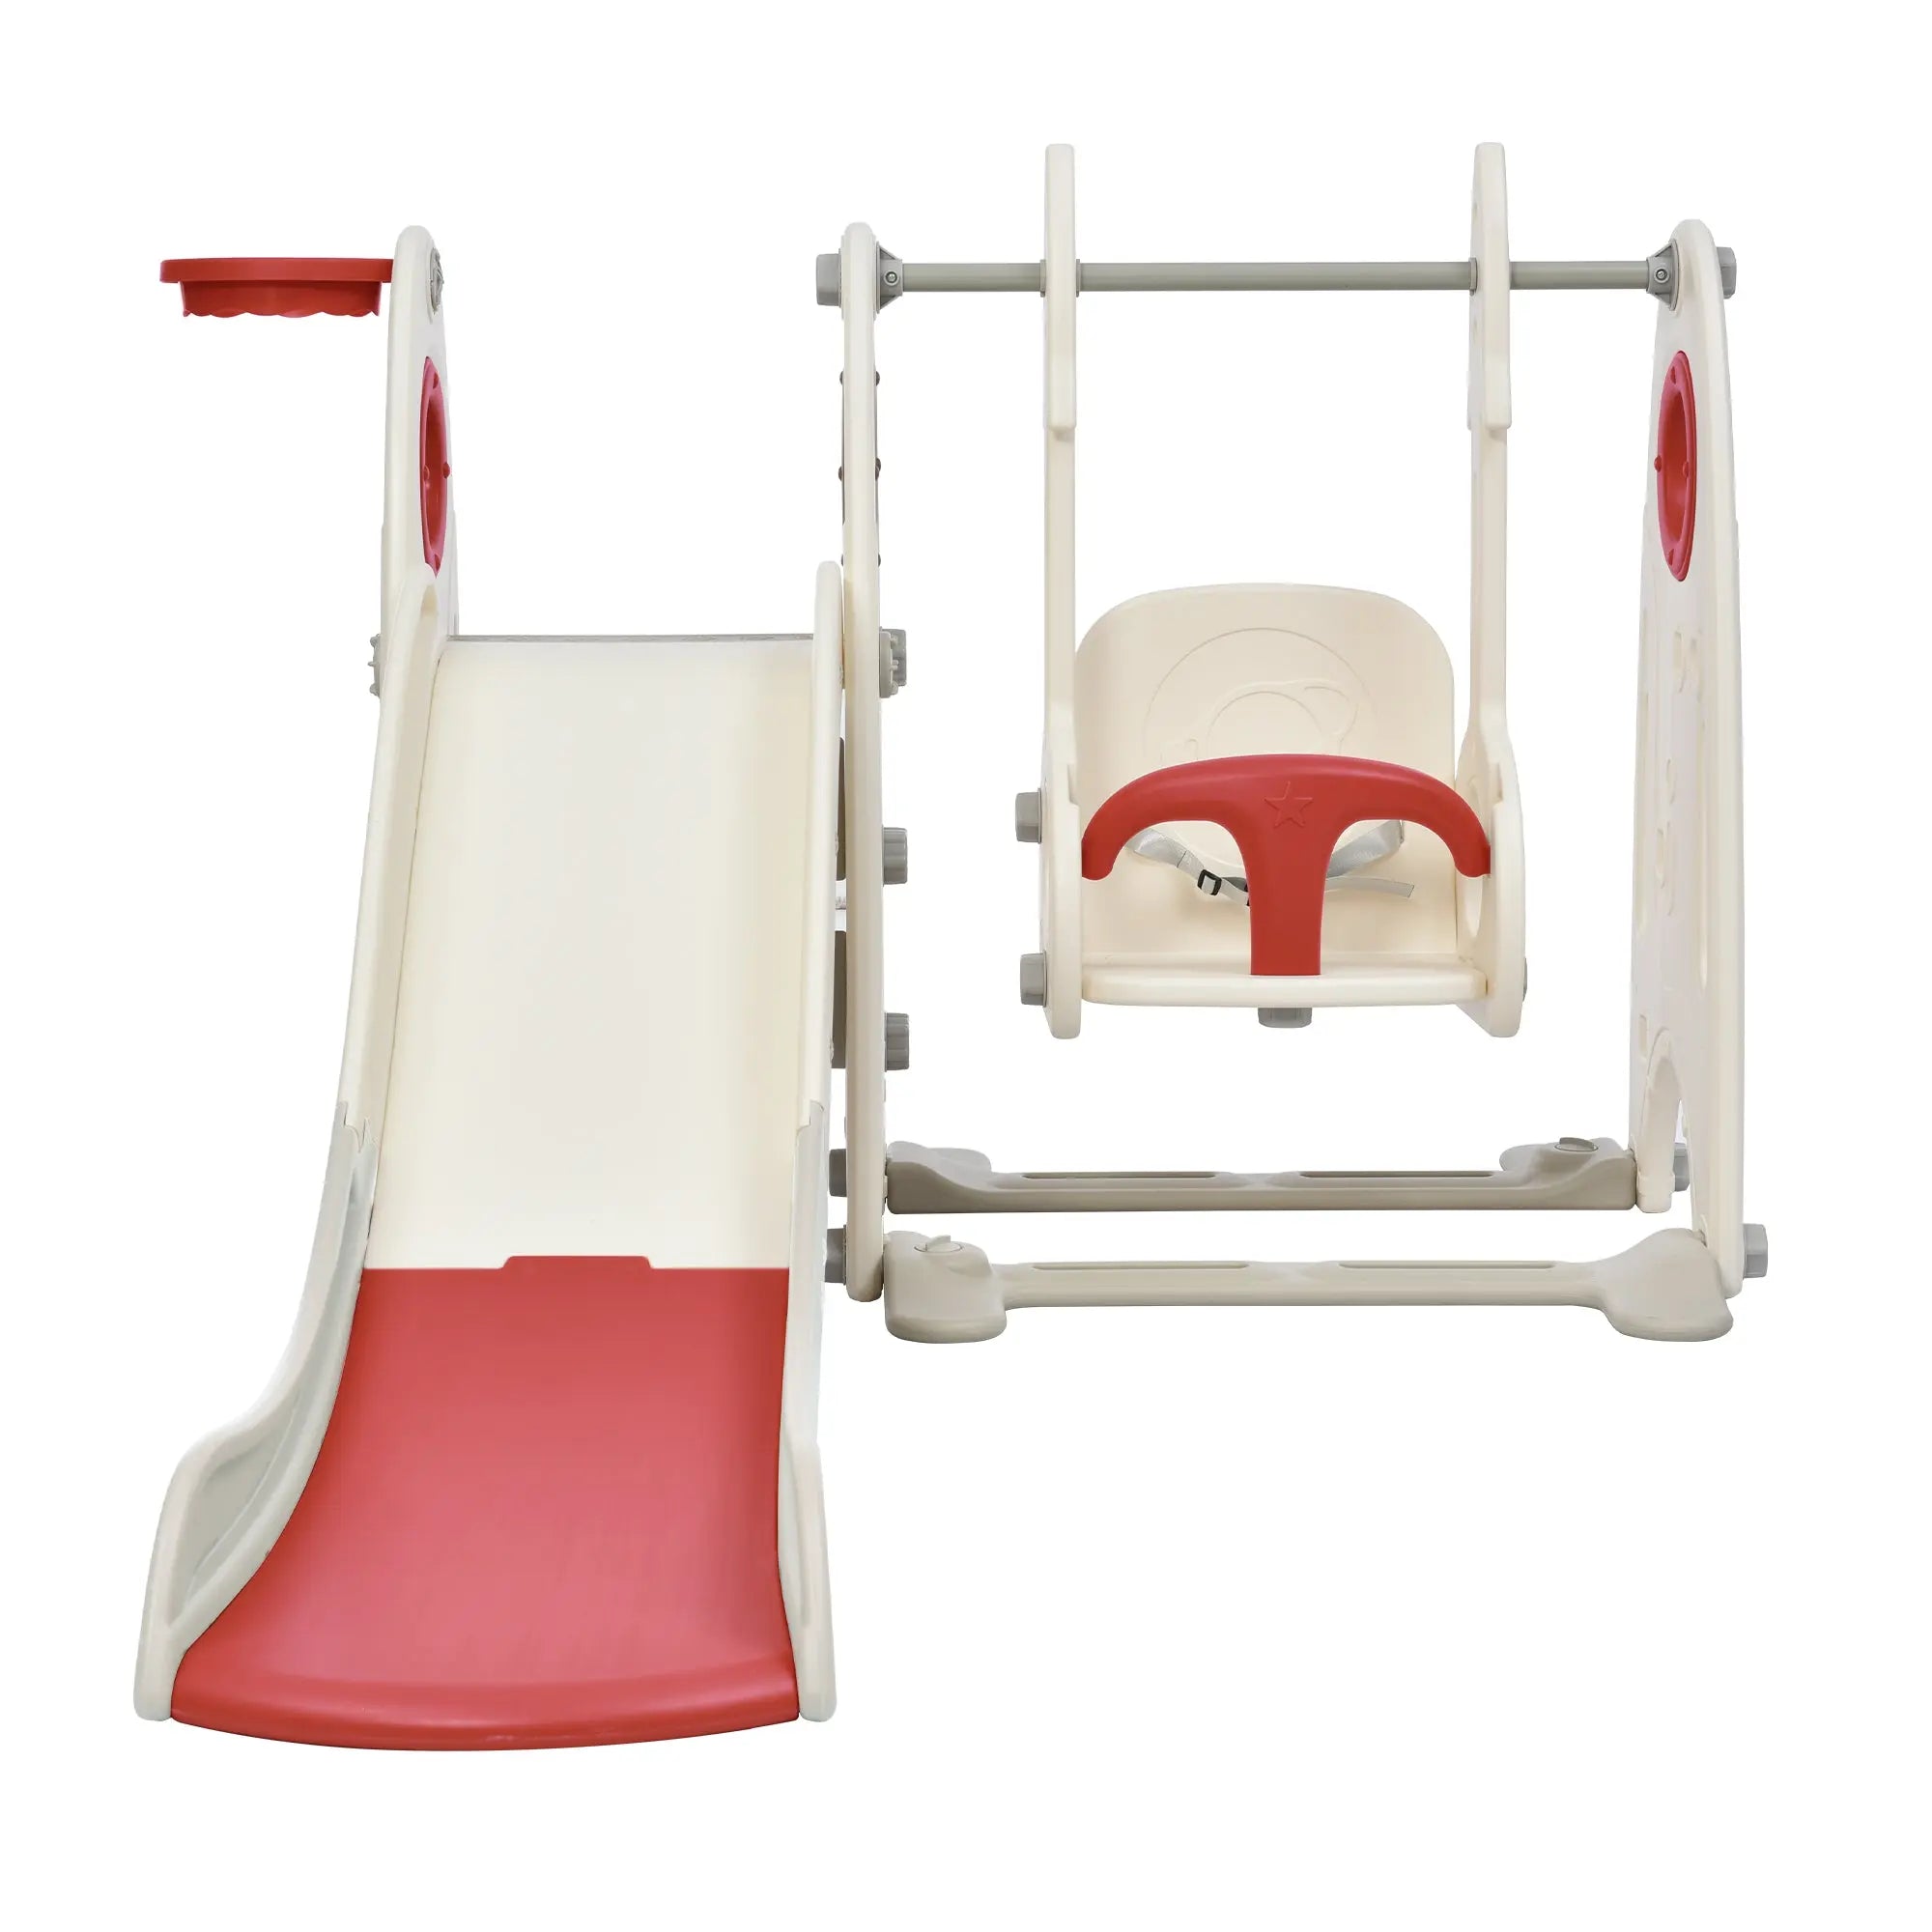 Bellemave 4 in 1 Toddler Slide and Swing Set, Kids Playground Climber Slide Playset with Basketball Hoop,Freestanding Combination Bellemave